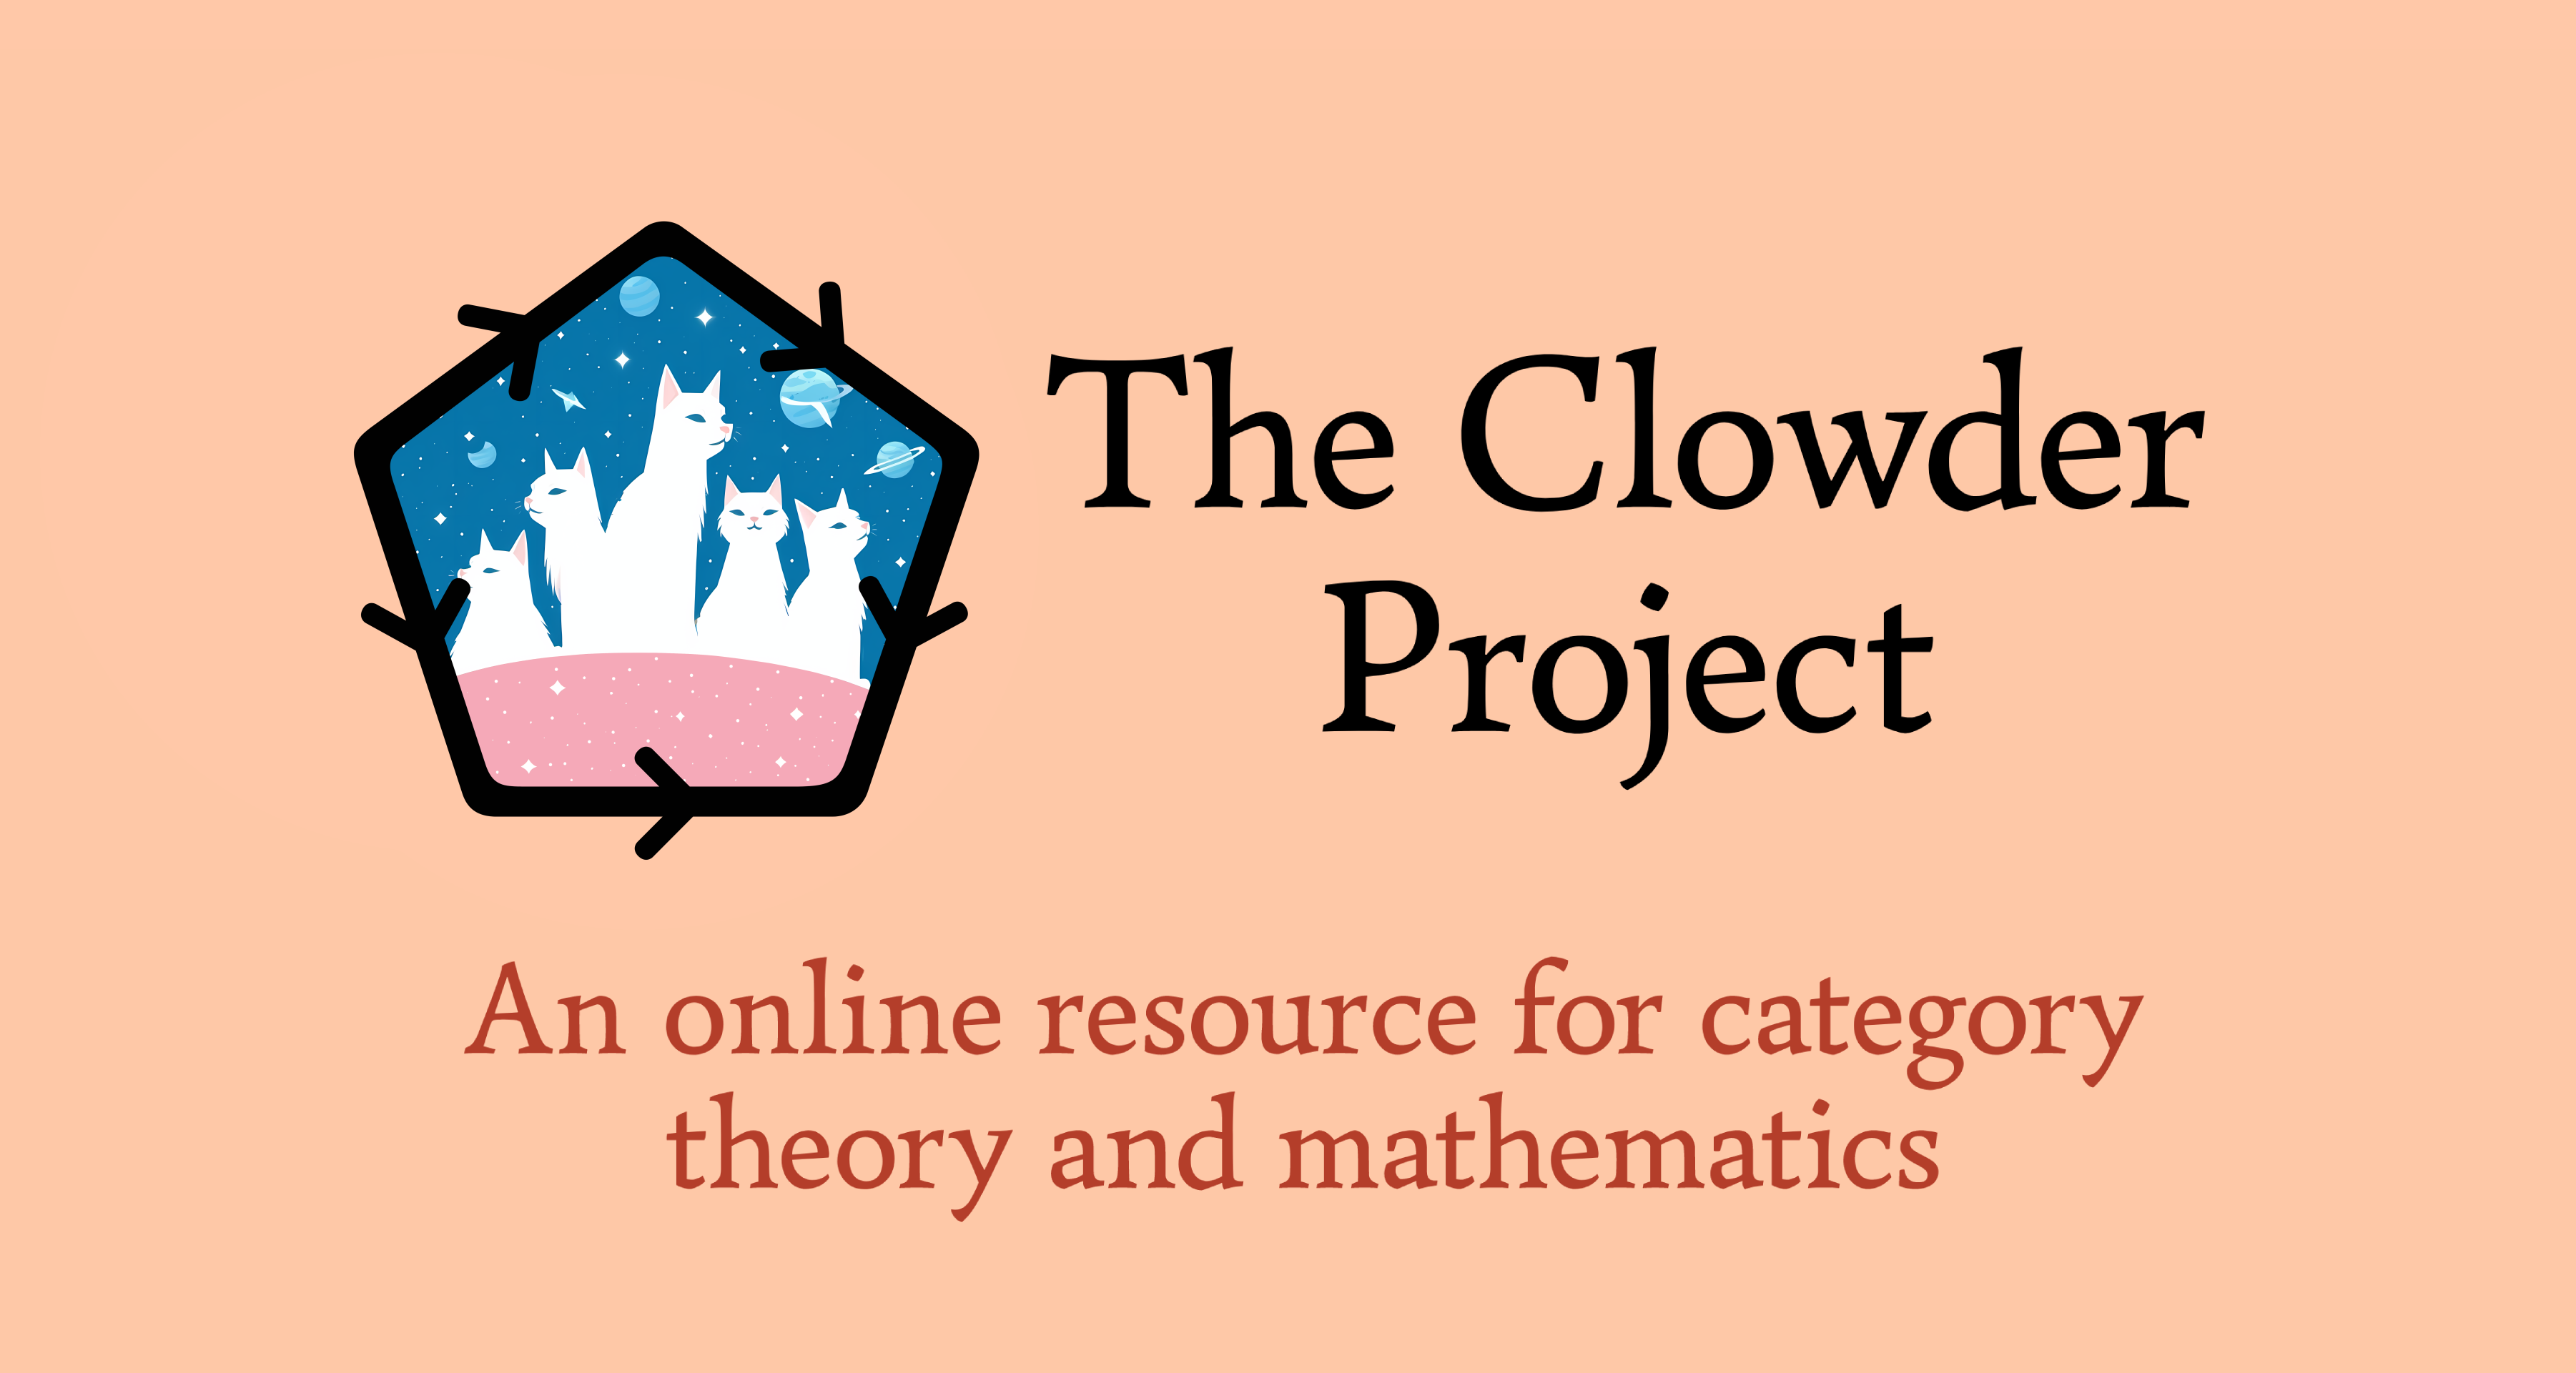 The Clowder Project